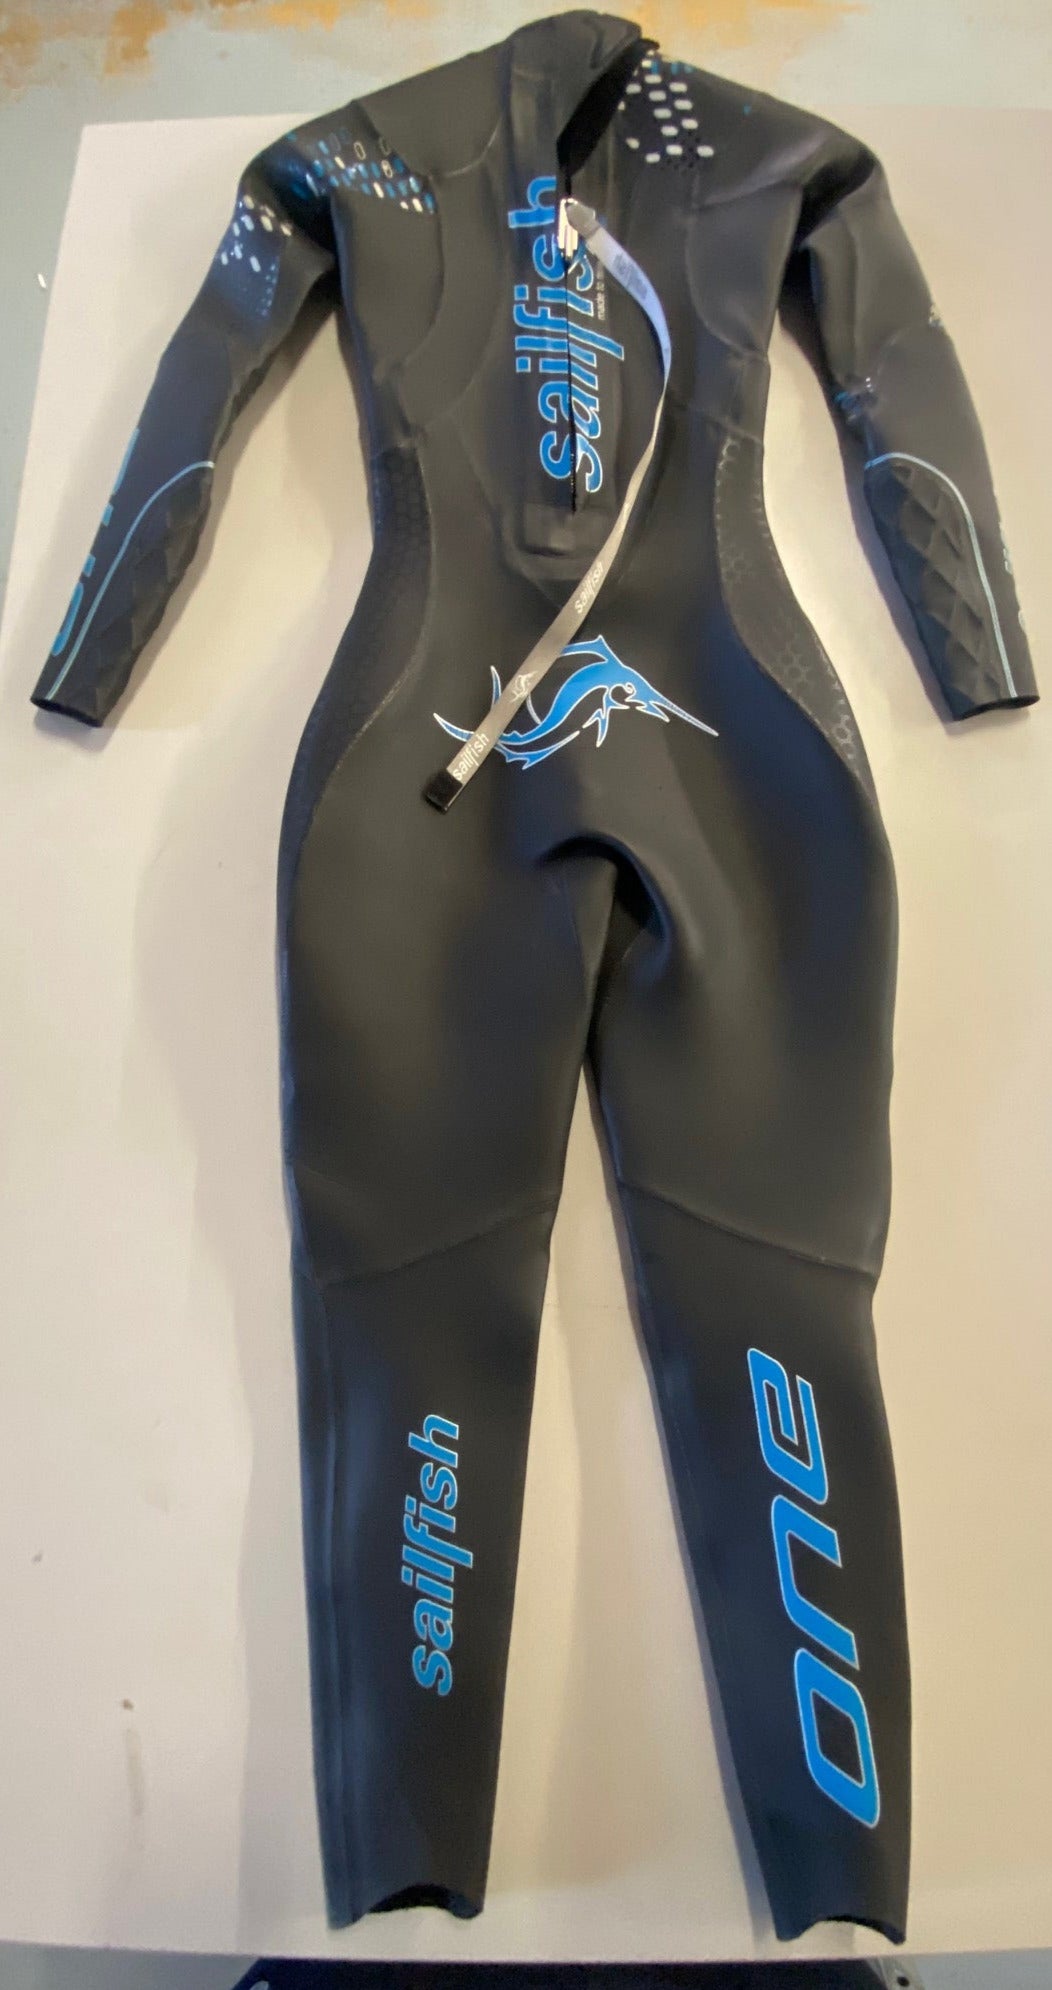 New model: Sailfish One, wetsuit, ladies